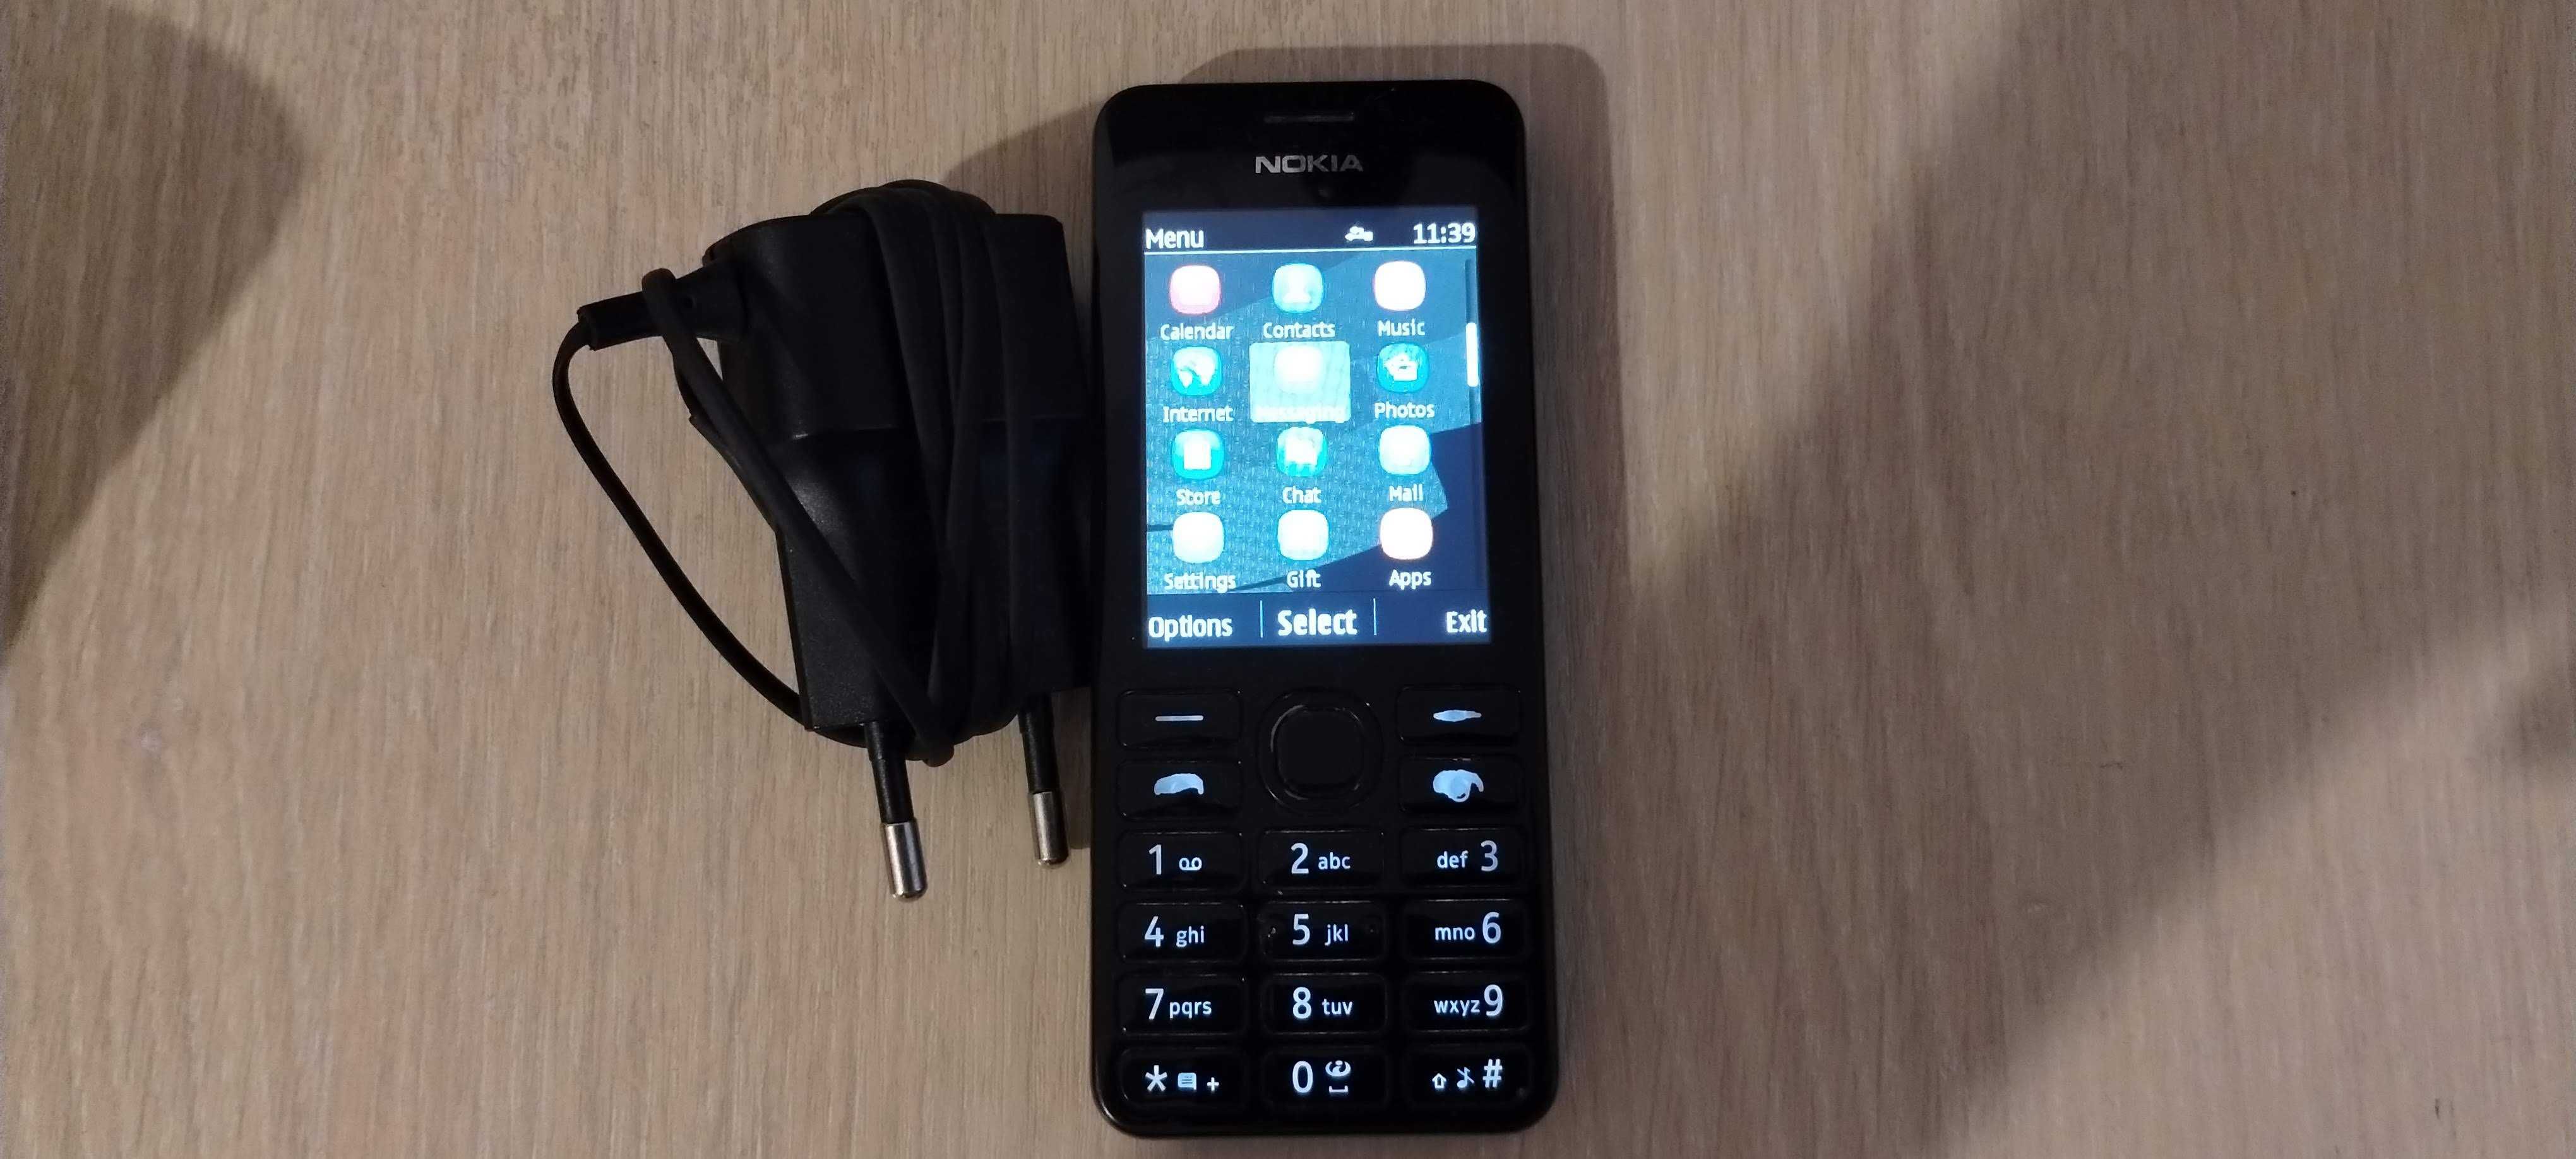 Nokia 206, incarcator, stare buna, liber retea